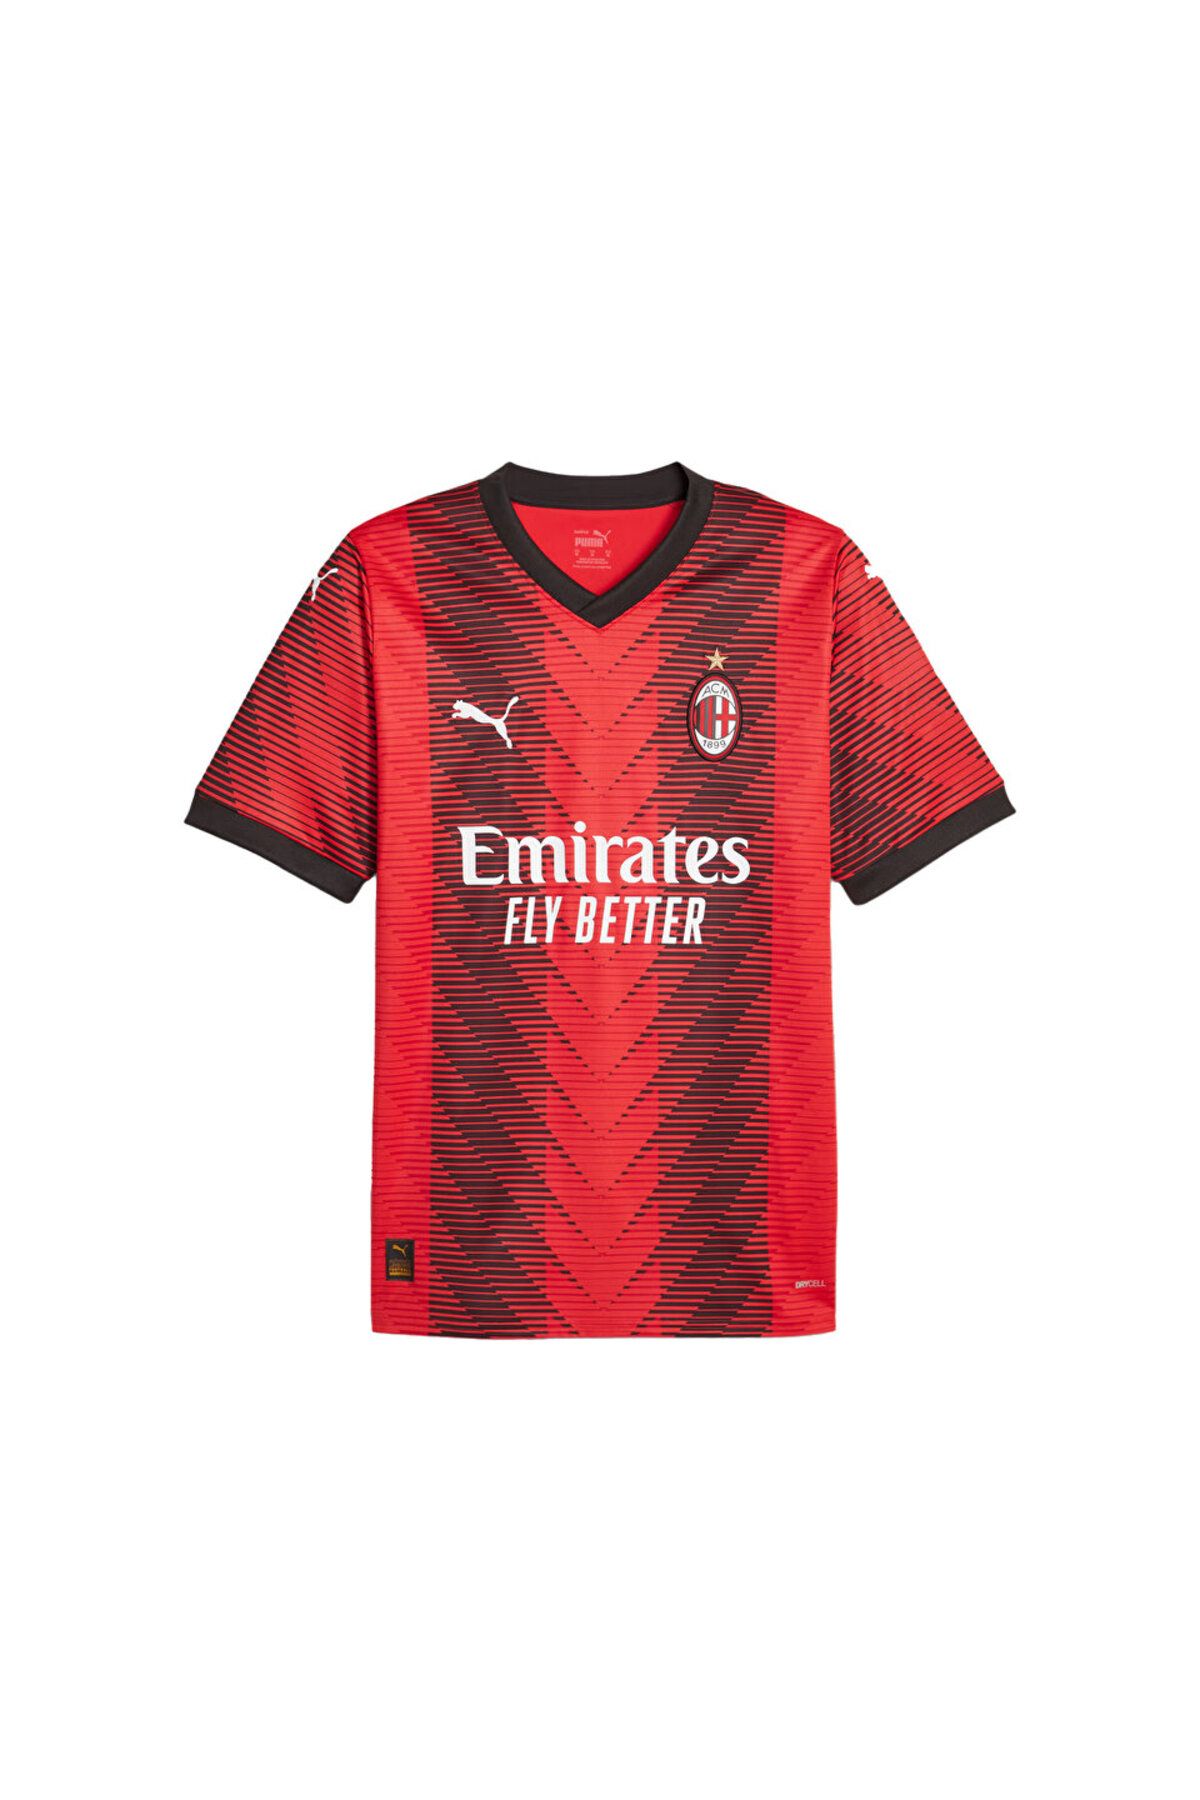 Puma Acm Home Jersey Ac Milan Futbol Forması 77038301 Kırmızı